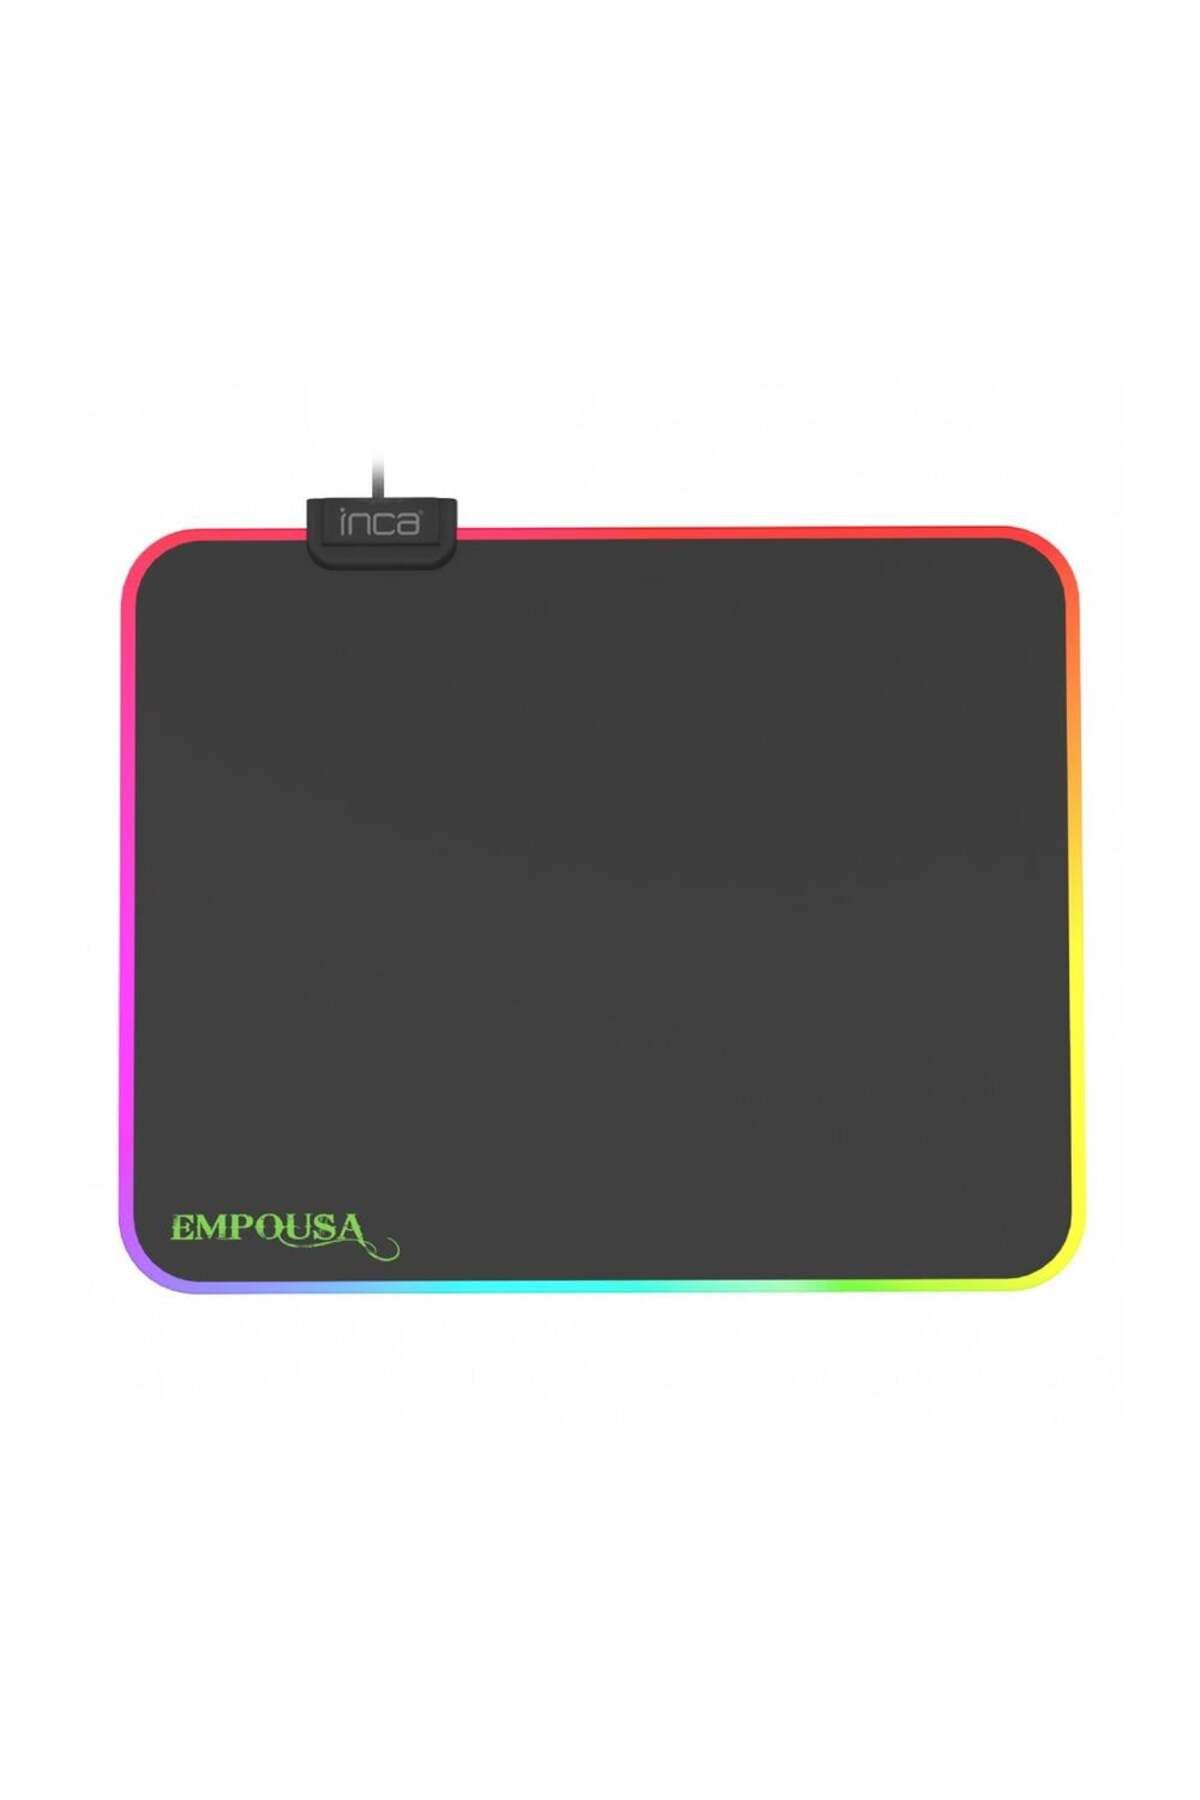 Inca IMP-024 EMPOUSA RGB 7 LED MEDIUM MOUSEPAD (320x270x3mm)